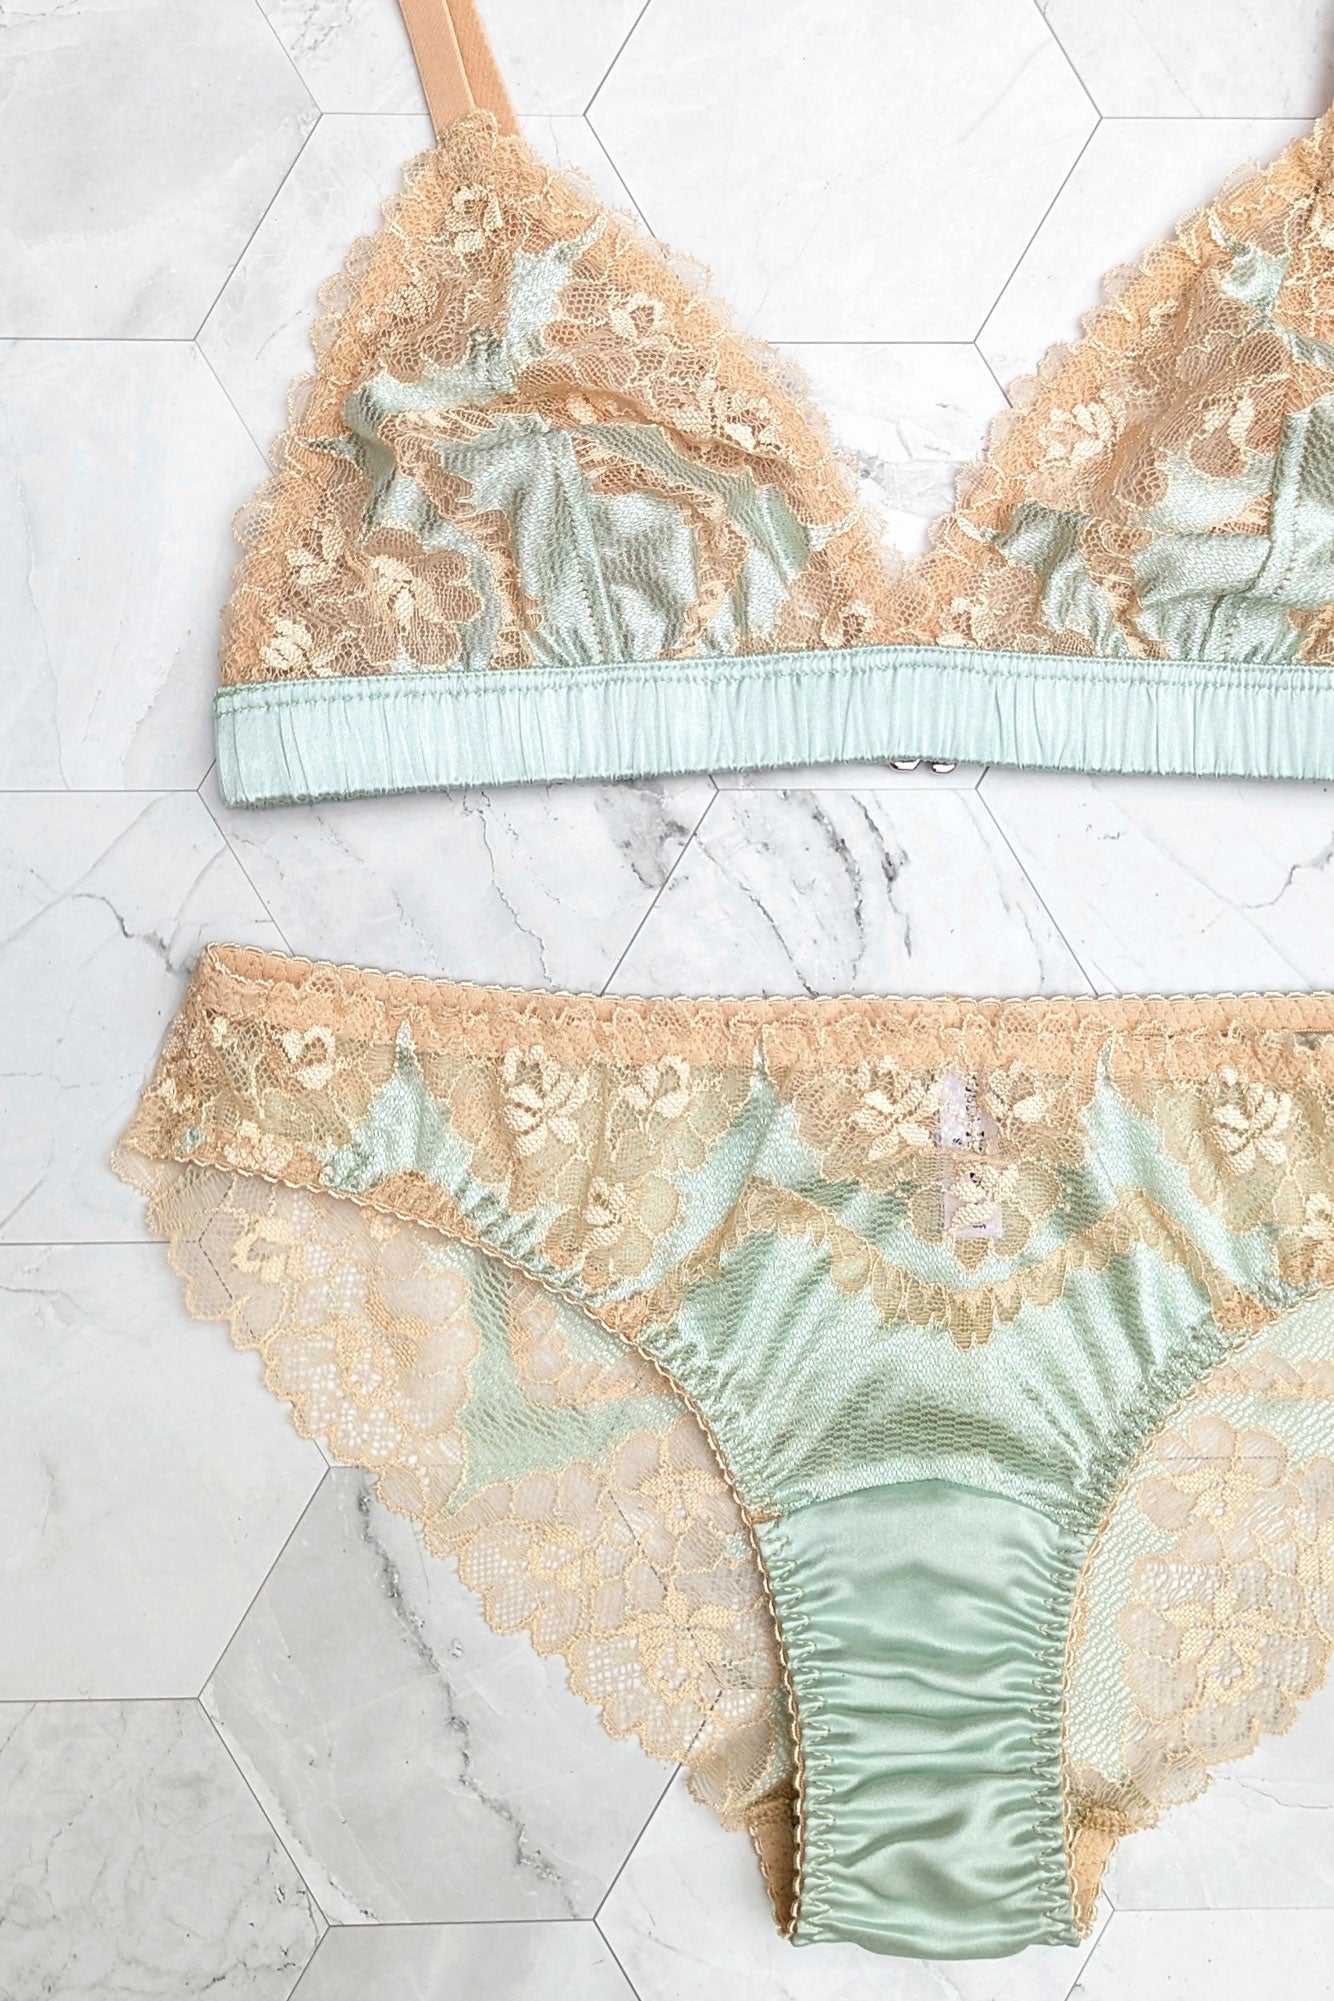 Willow mint green and beige lace underwear set by luxury lingerie designer Angela Friedman